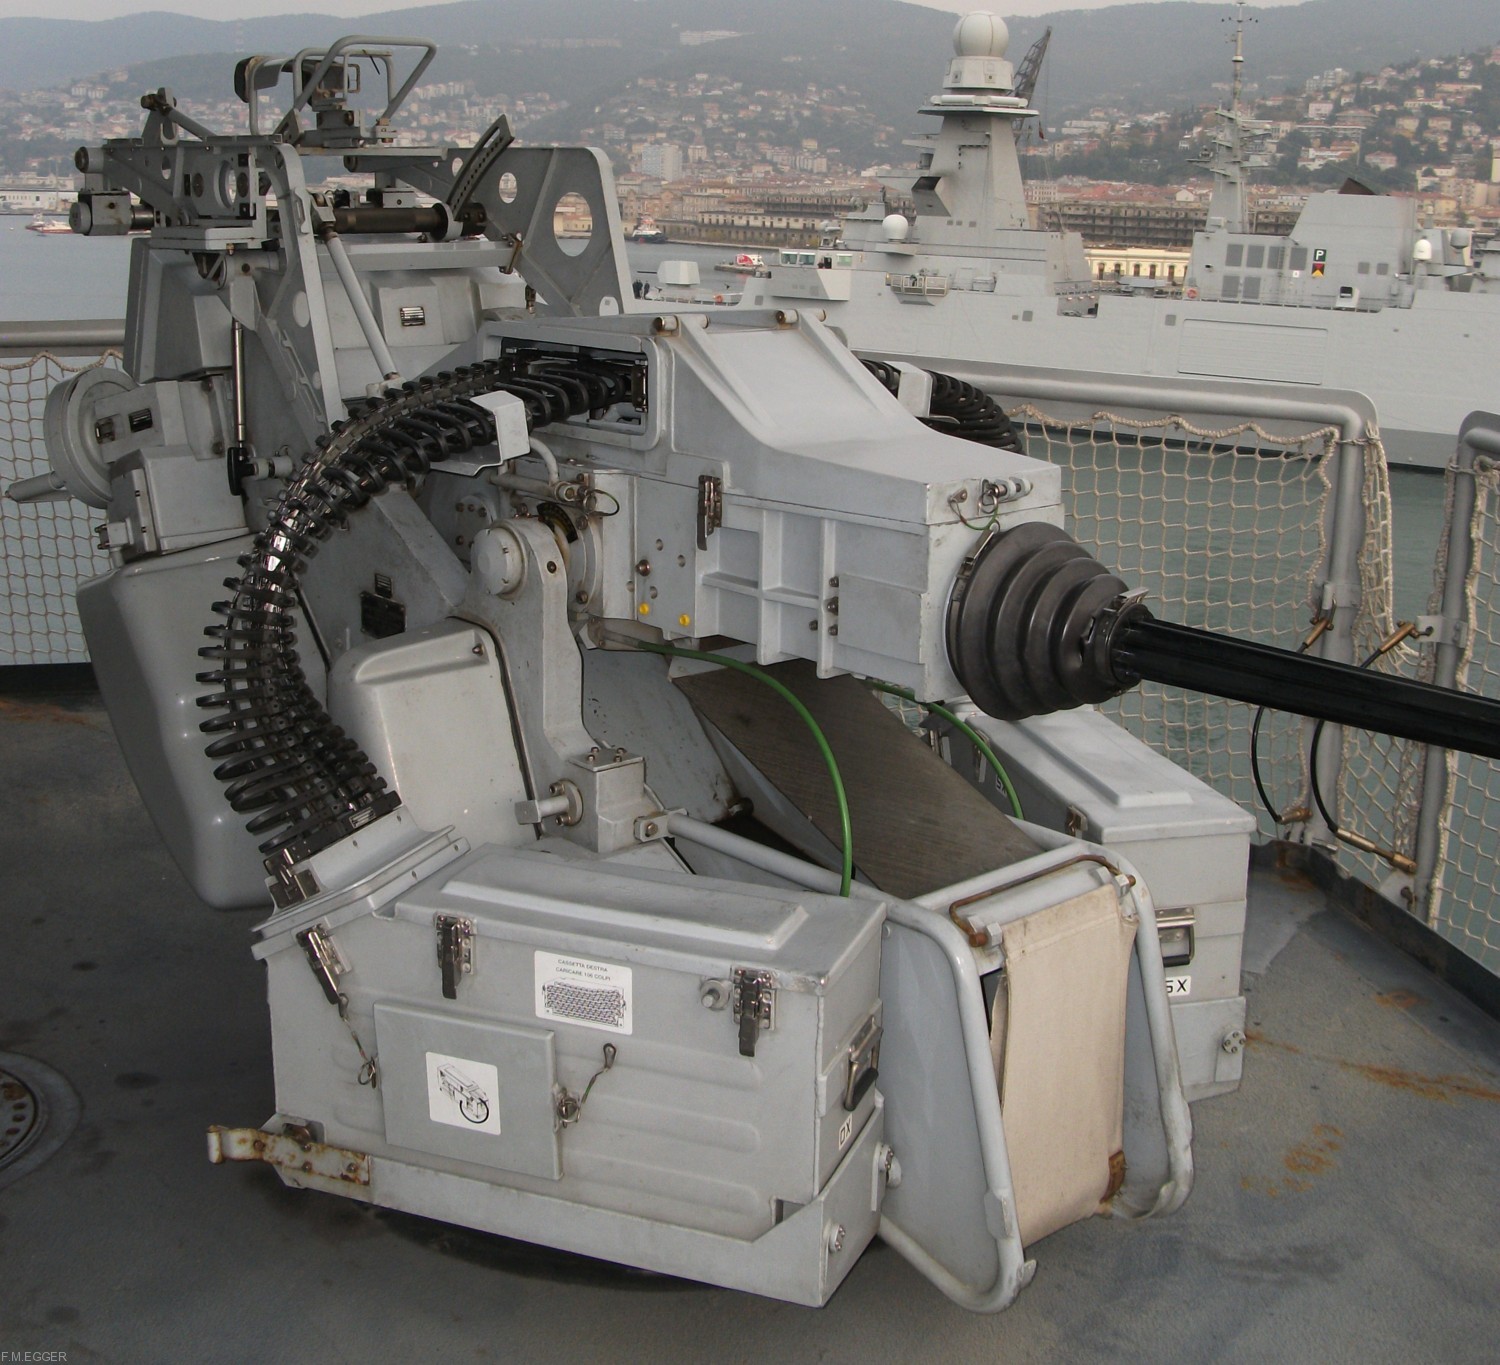 kba 25/80 mm machine gun system oto melara breda oerlikon leonardo italian navy marina militare 08 nave cavour carrier